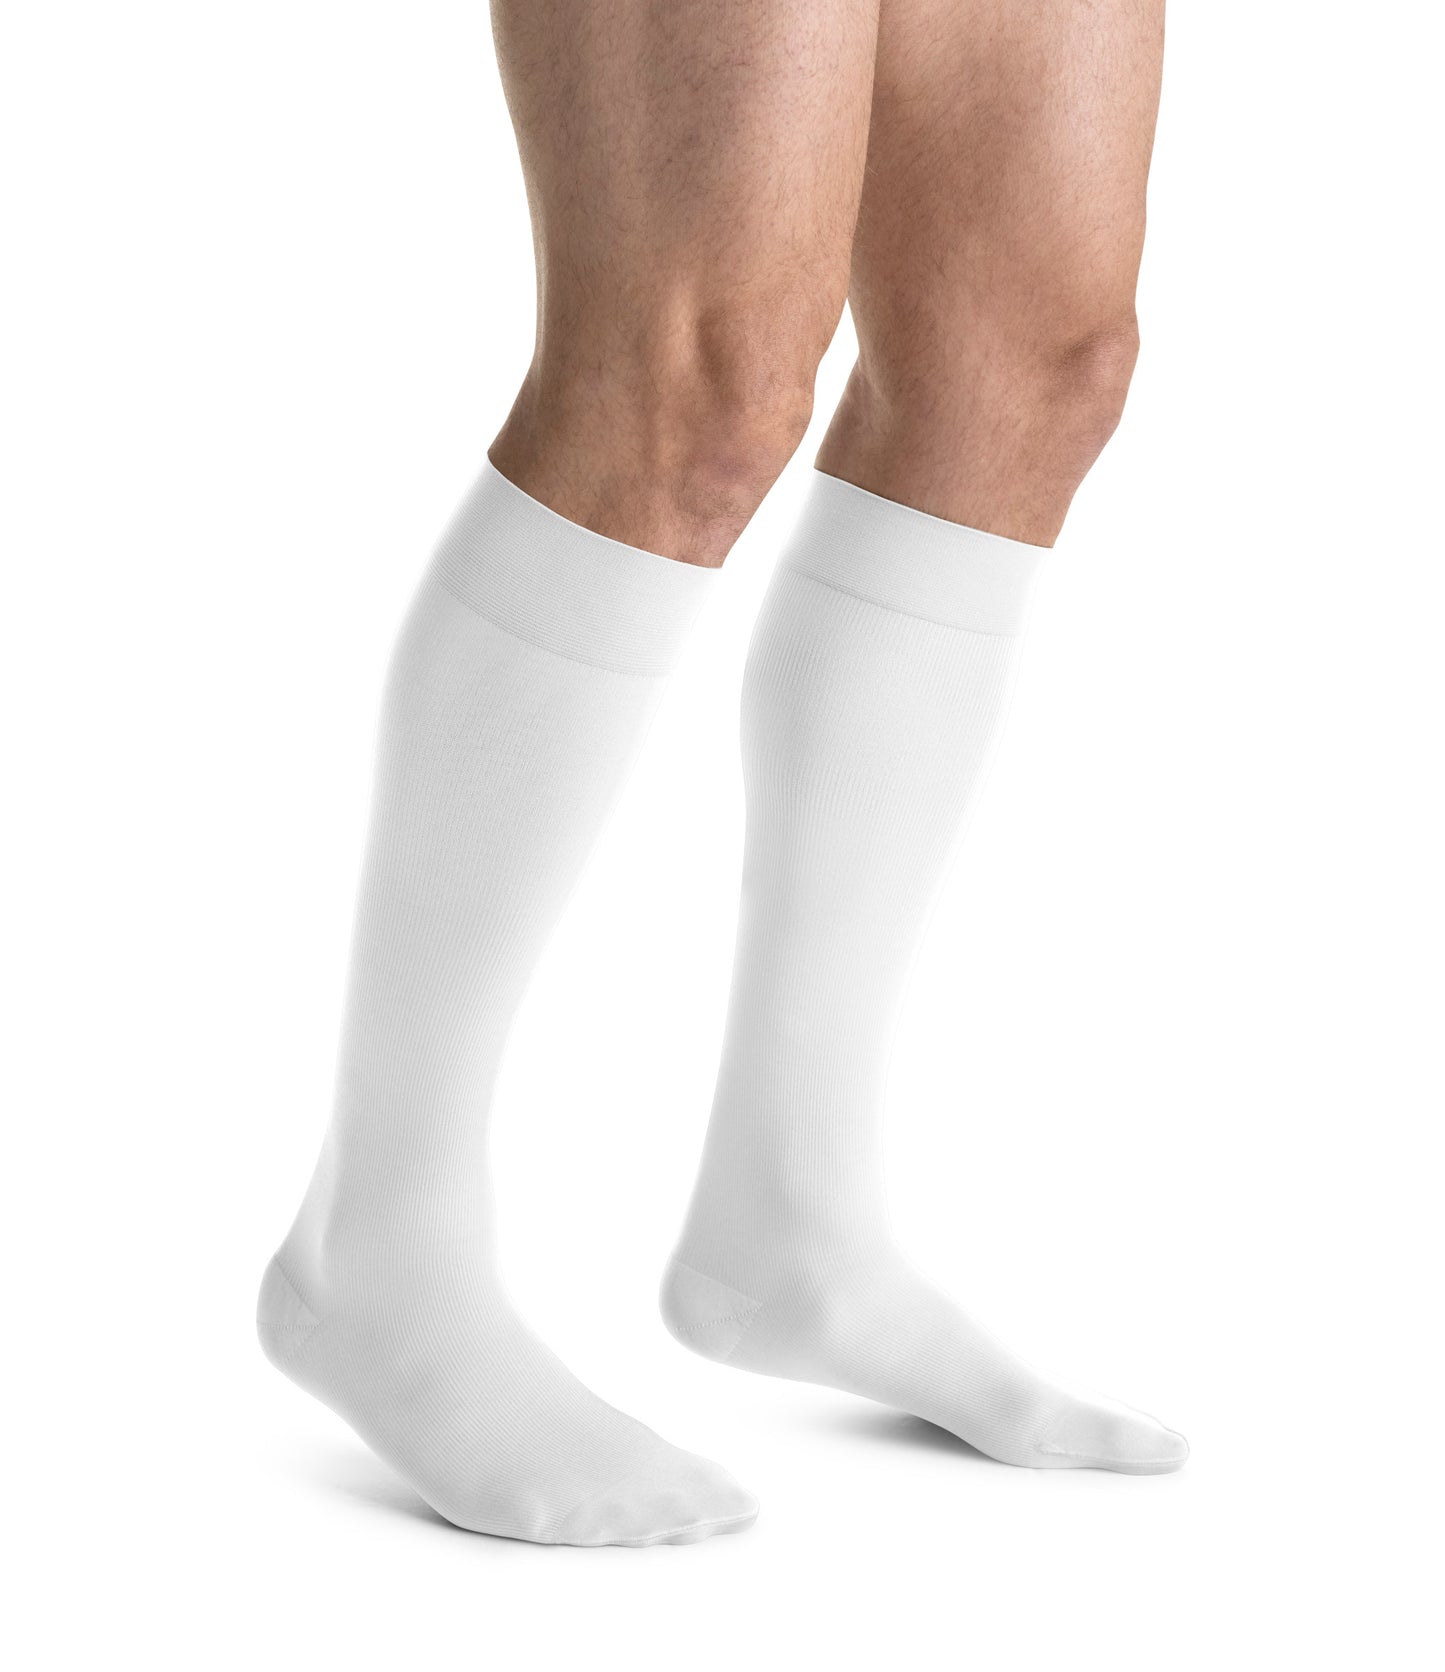 JOBST forMen Compression Socks 8-15 mmHg Knee High Closed Toe